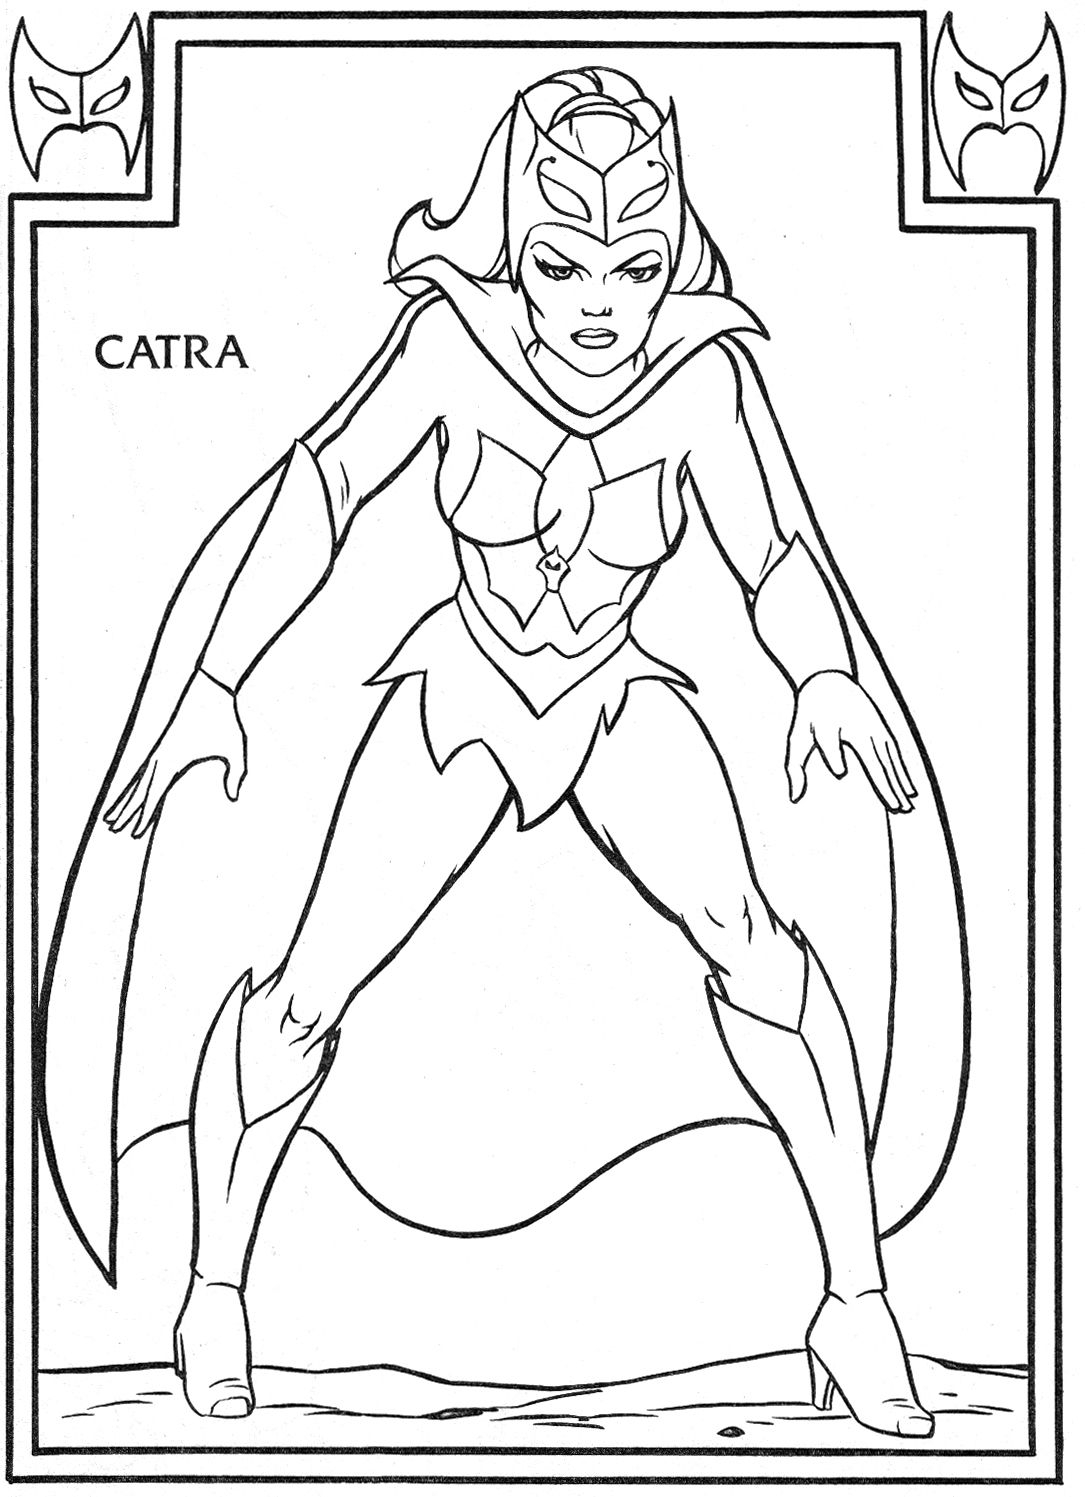 She-Ra: Princess of Power (1985) - coloring book 25